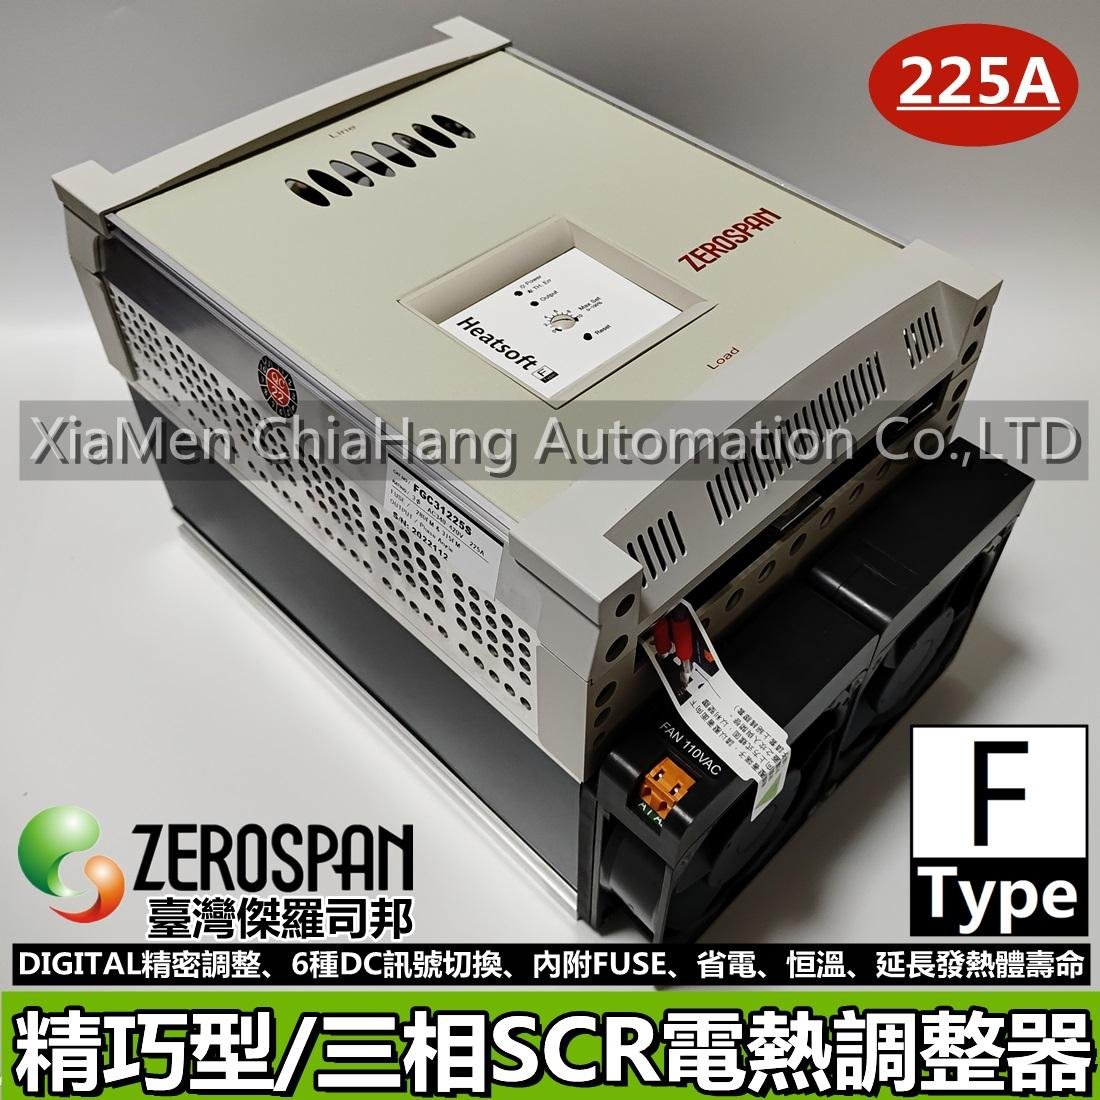 ZEROSPAN HEATSOFT FG32300 FG31225S FG32225 FF42225 TAIWAN SCR Power Regulator  